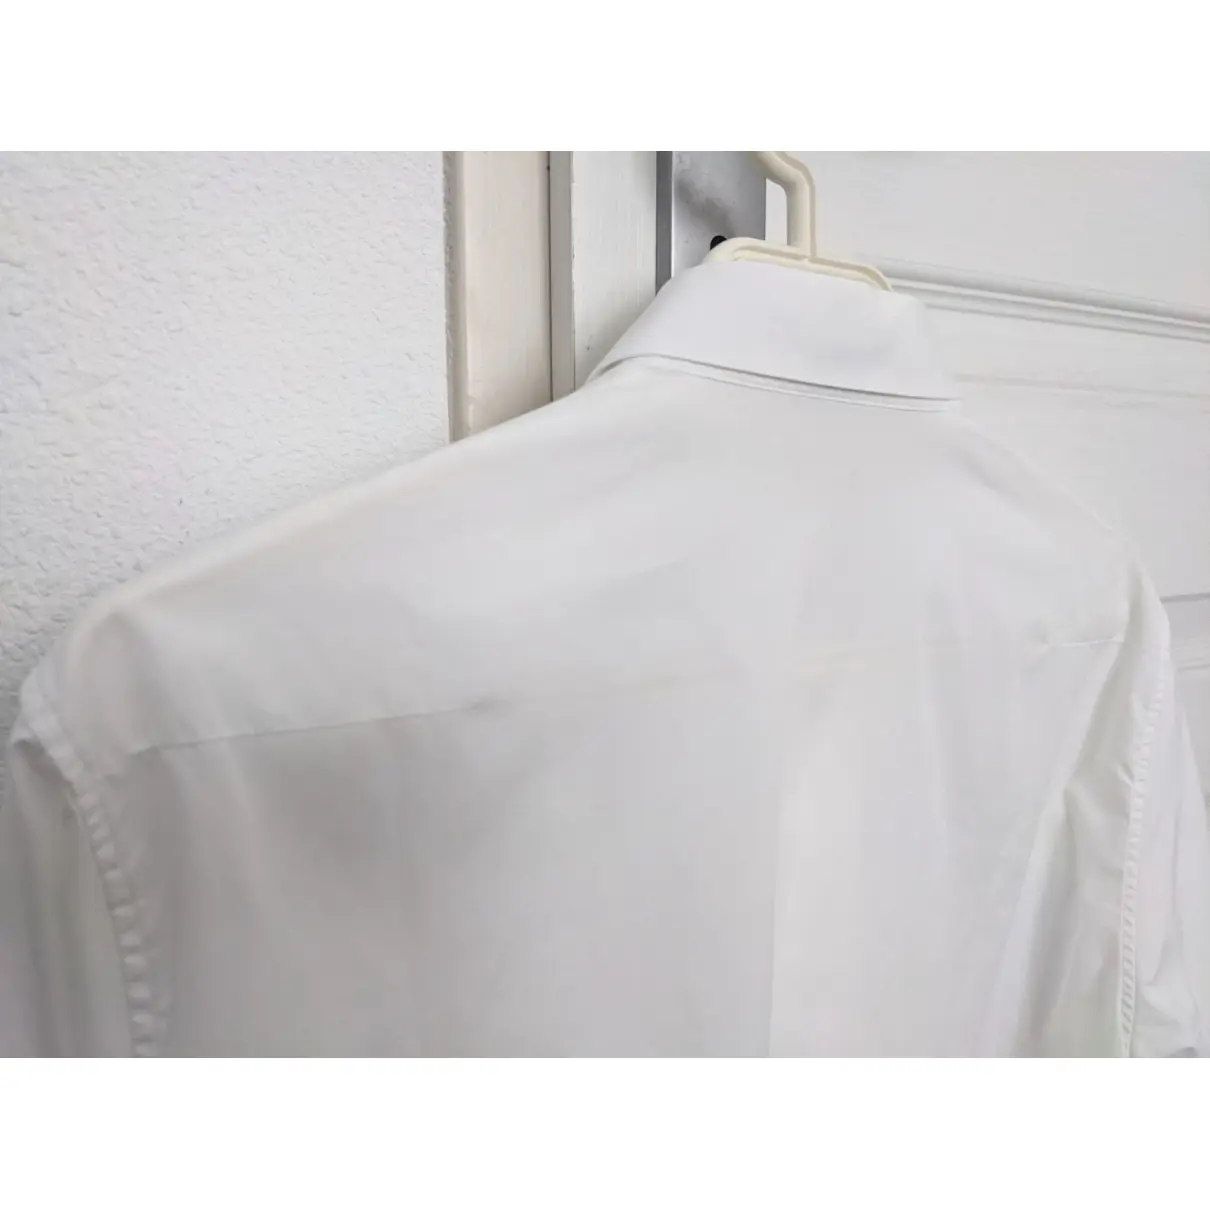 Buy Dior Homme Shirt online